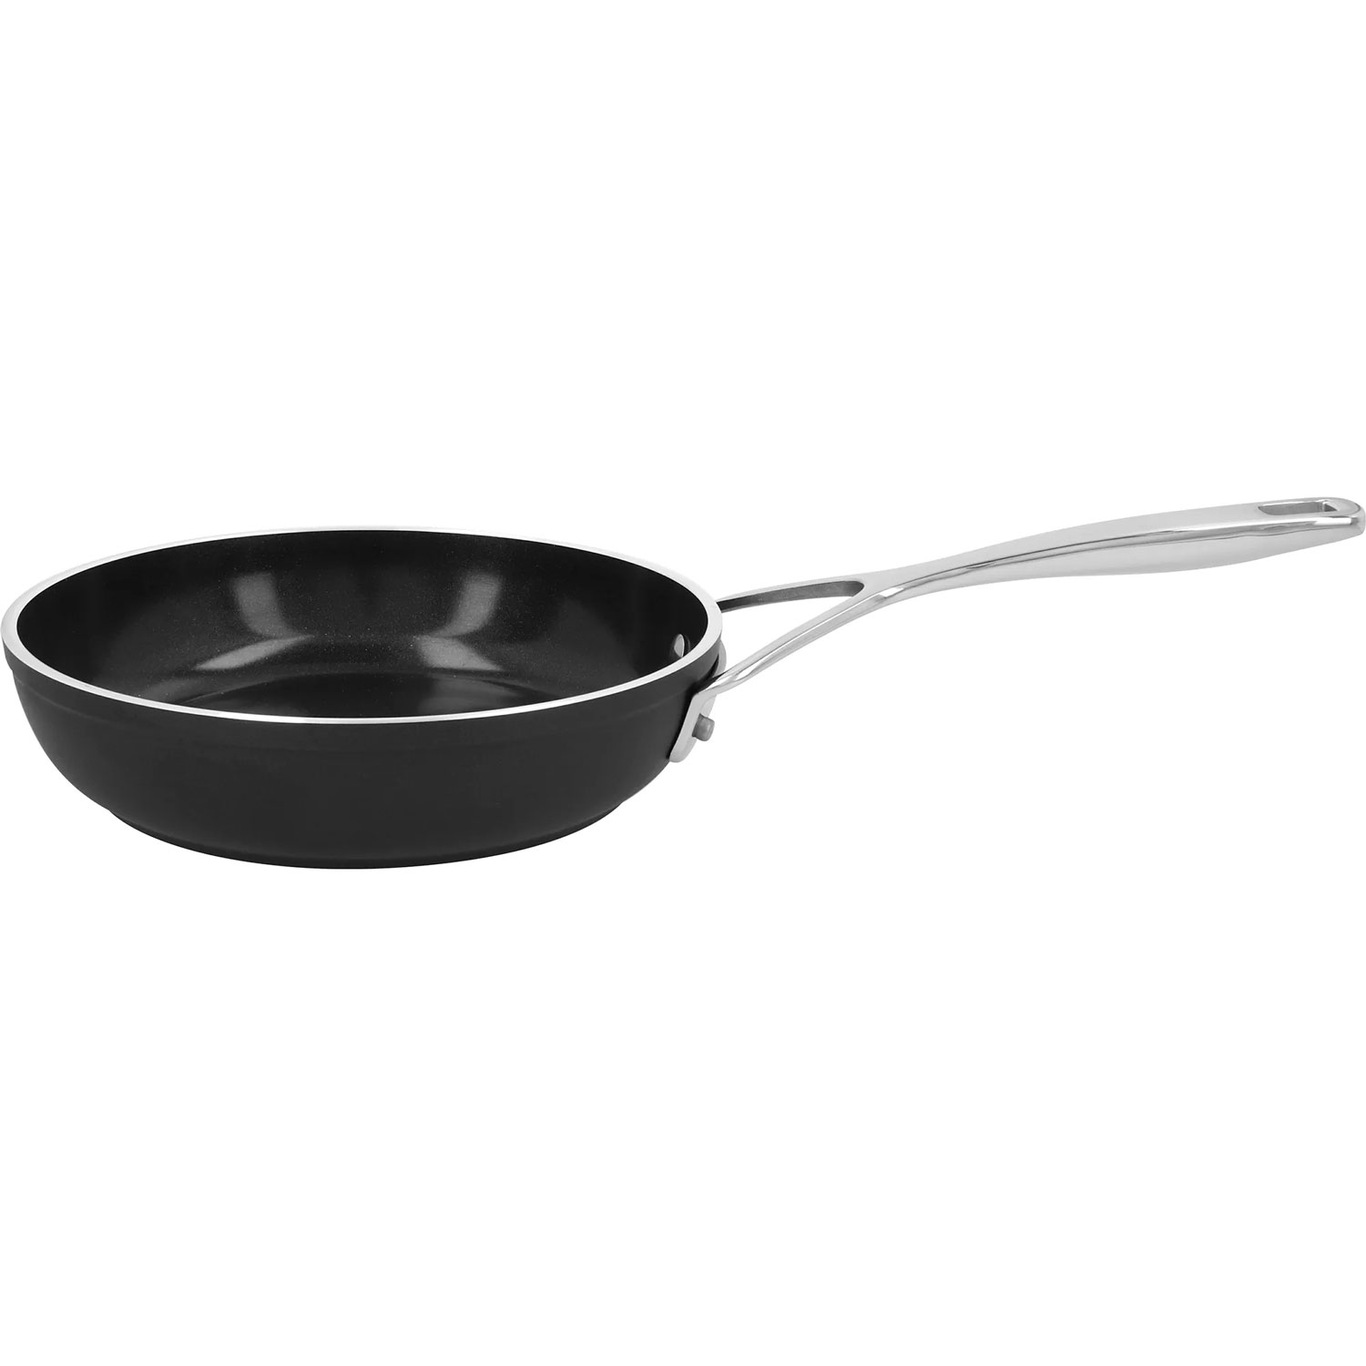 Alu Pro 5 Frying Pan, 20 cm